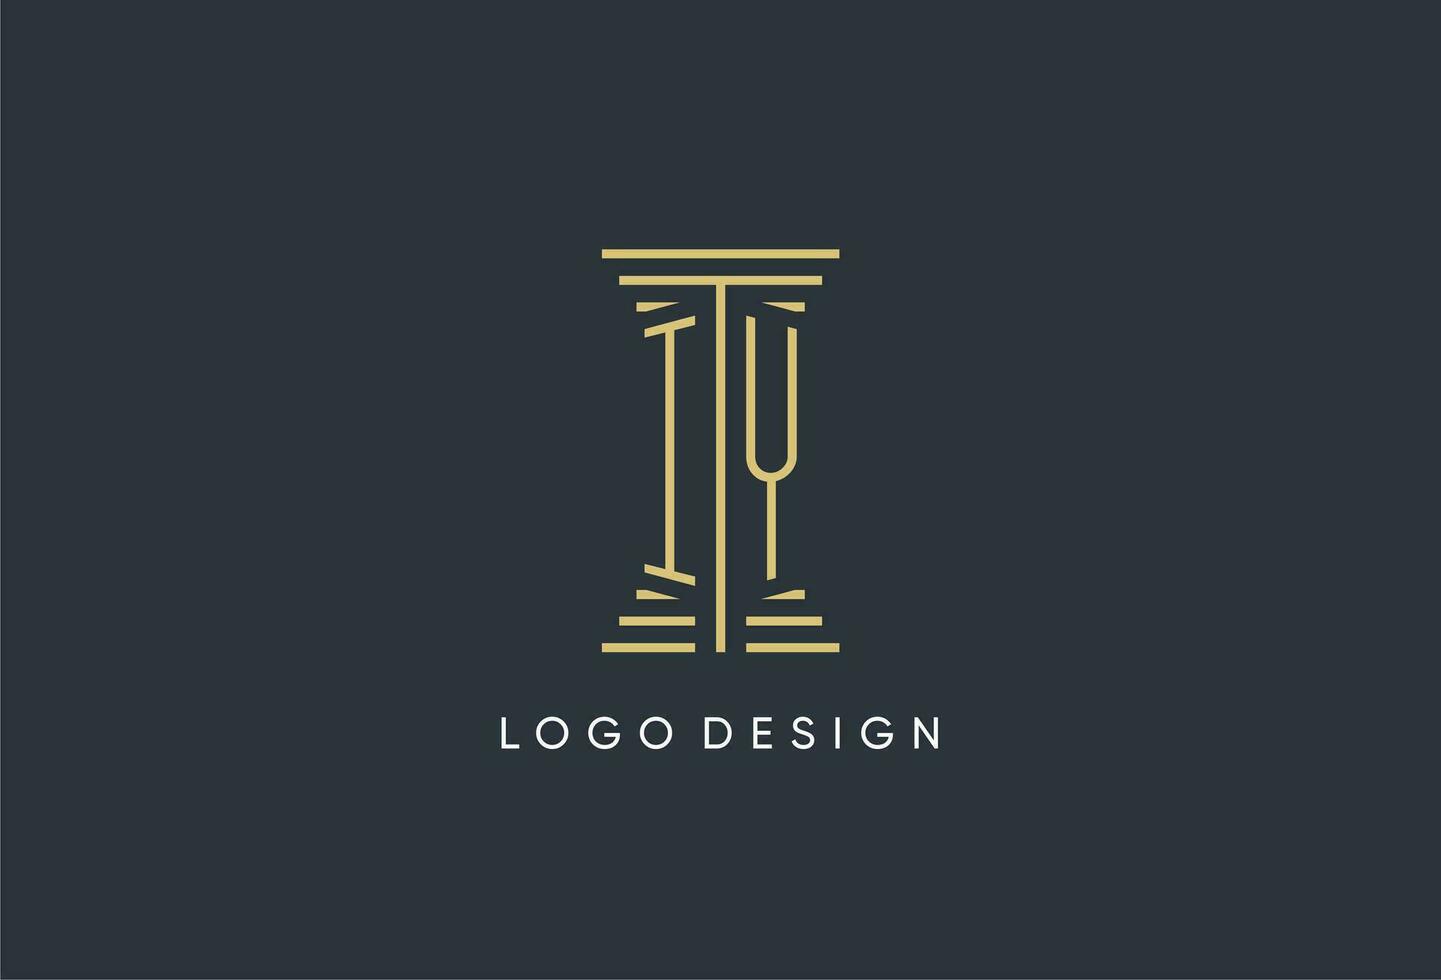 IY initial monogram with pillar shape logo design vector